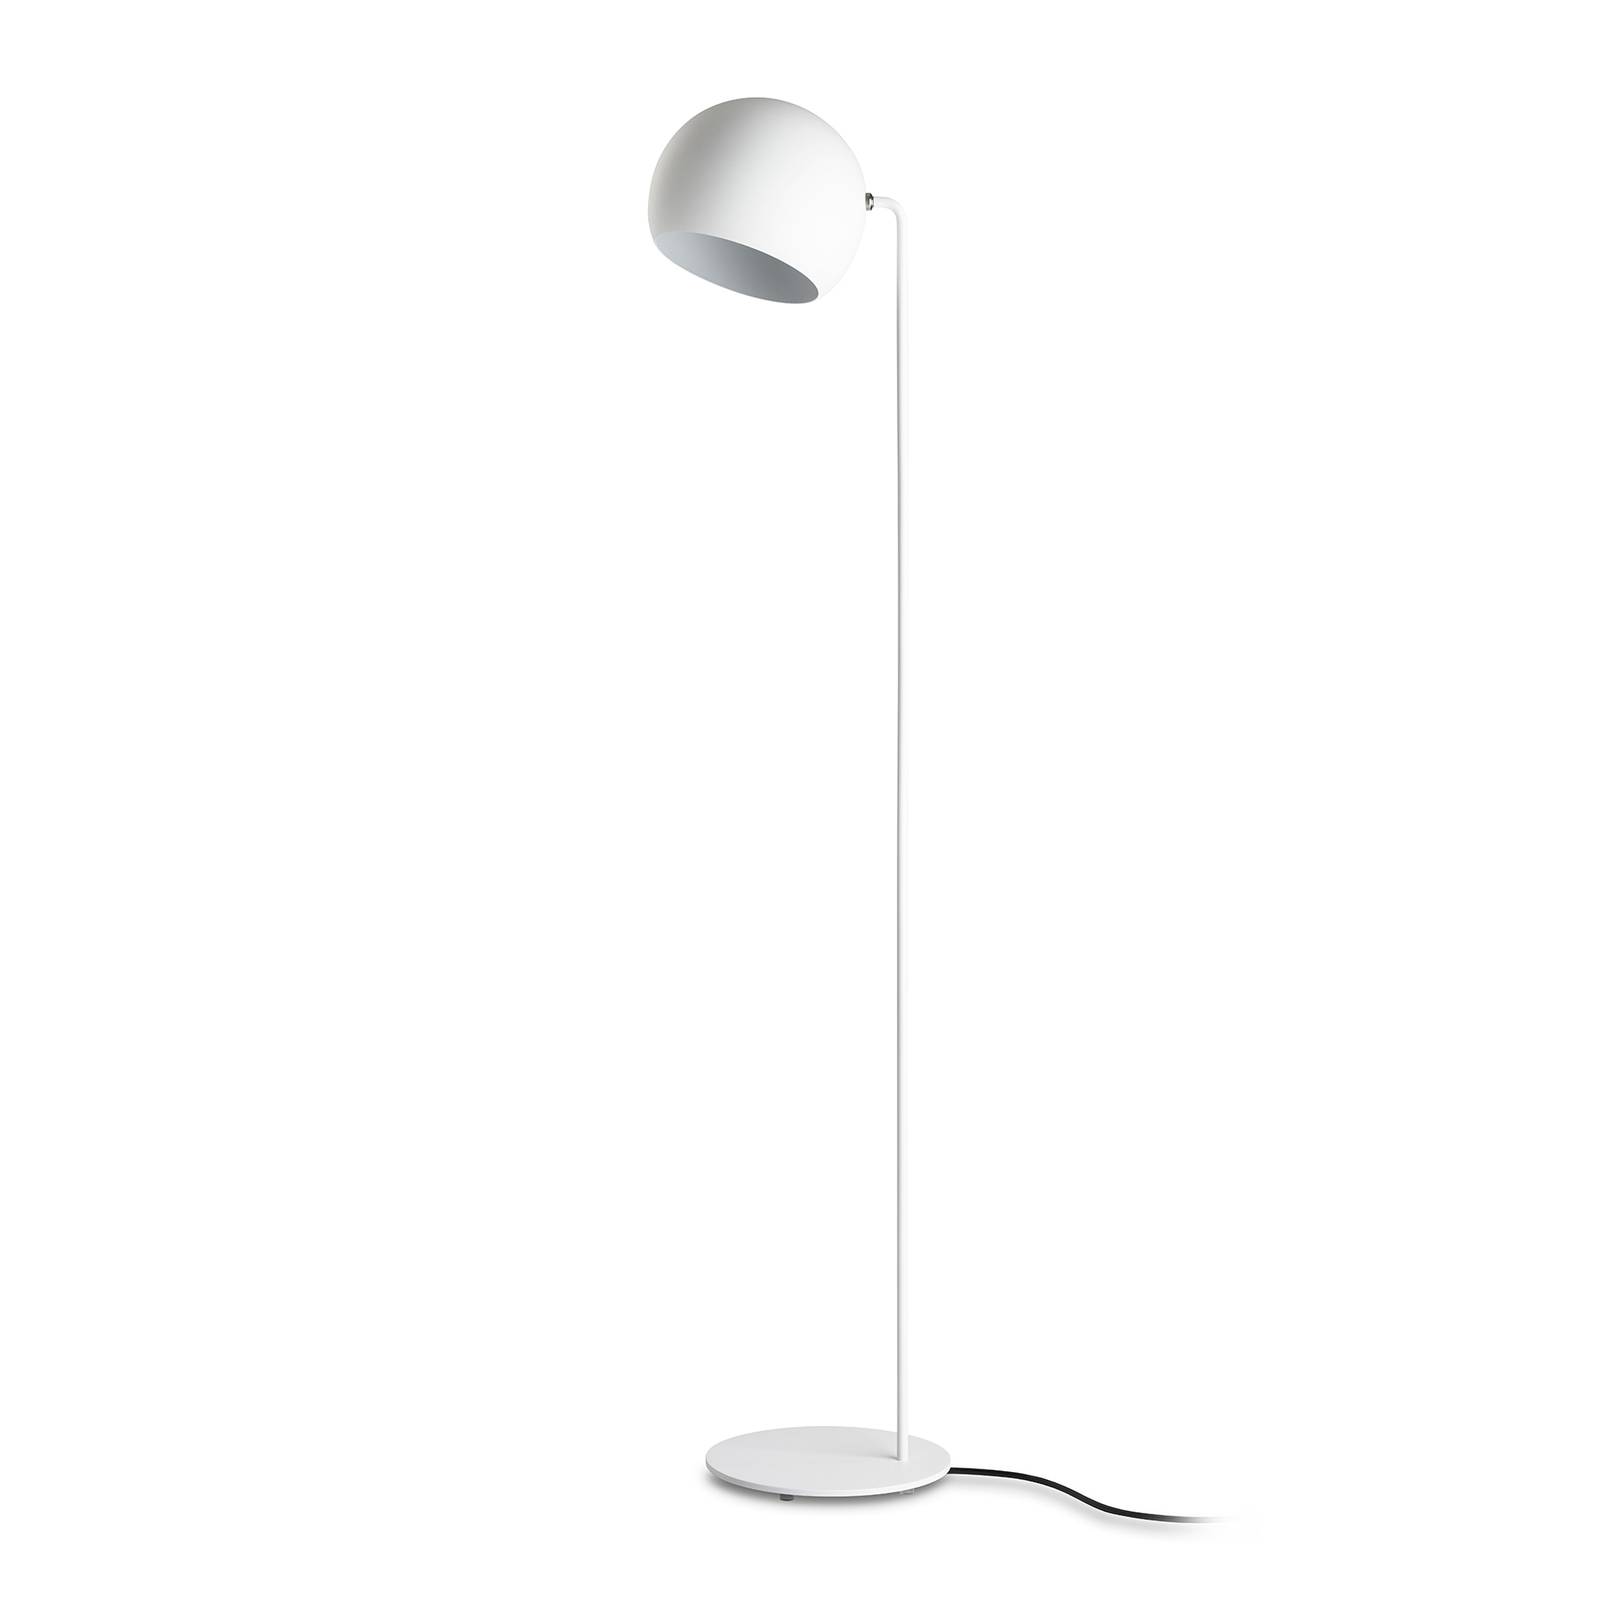 Image of Nyta Tilt Globe Floor lampadaire blanc mat 4260366488935